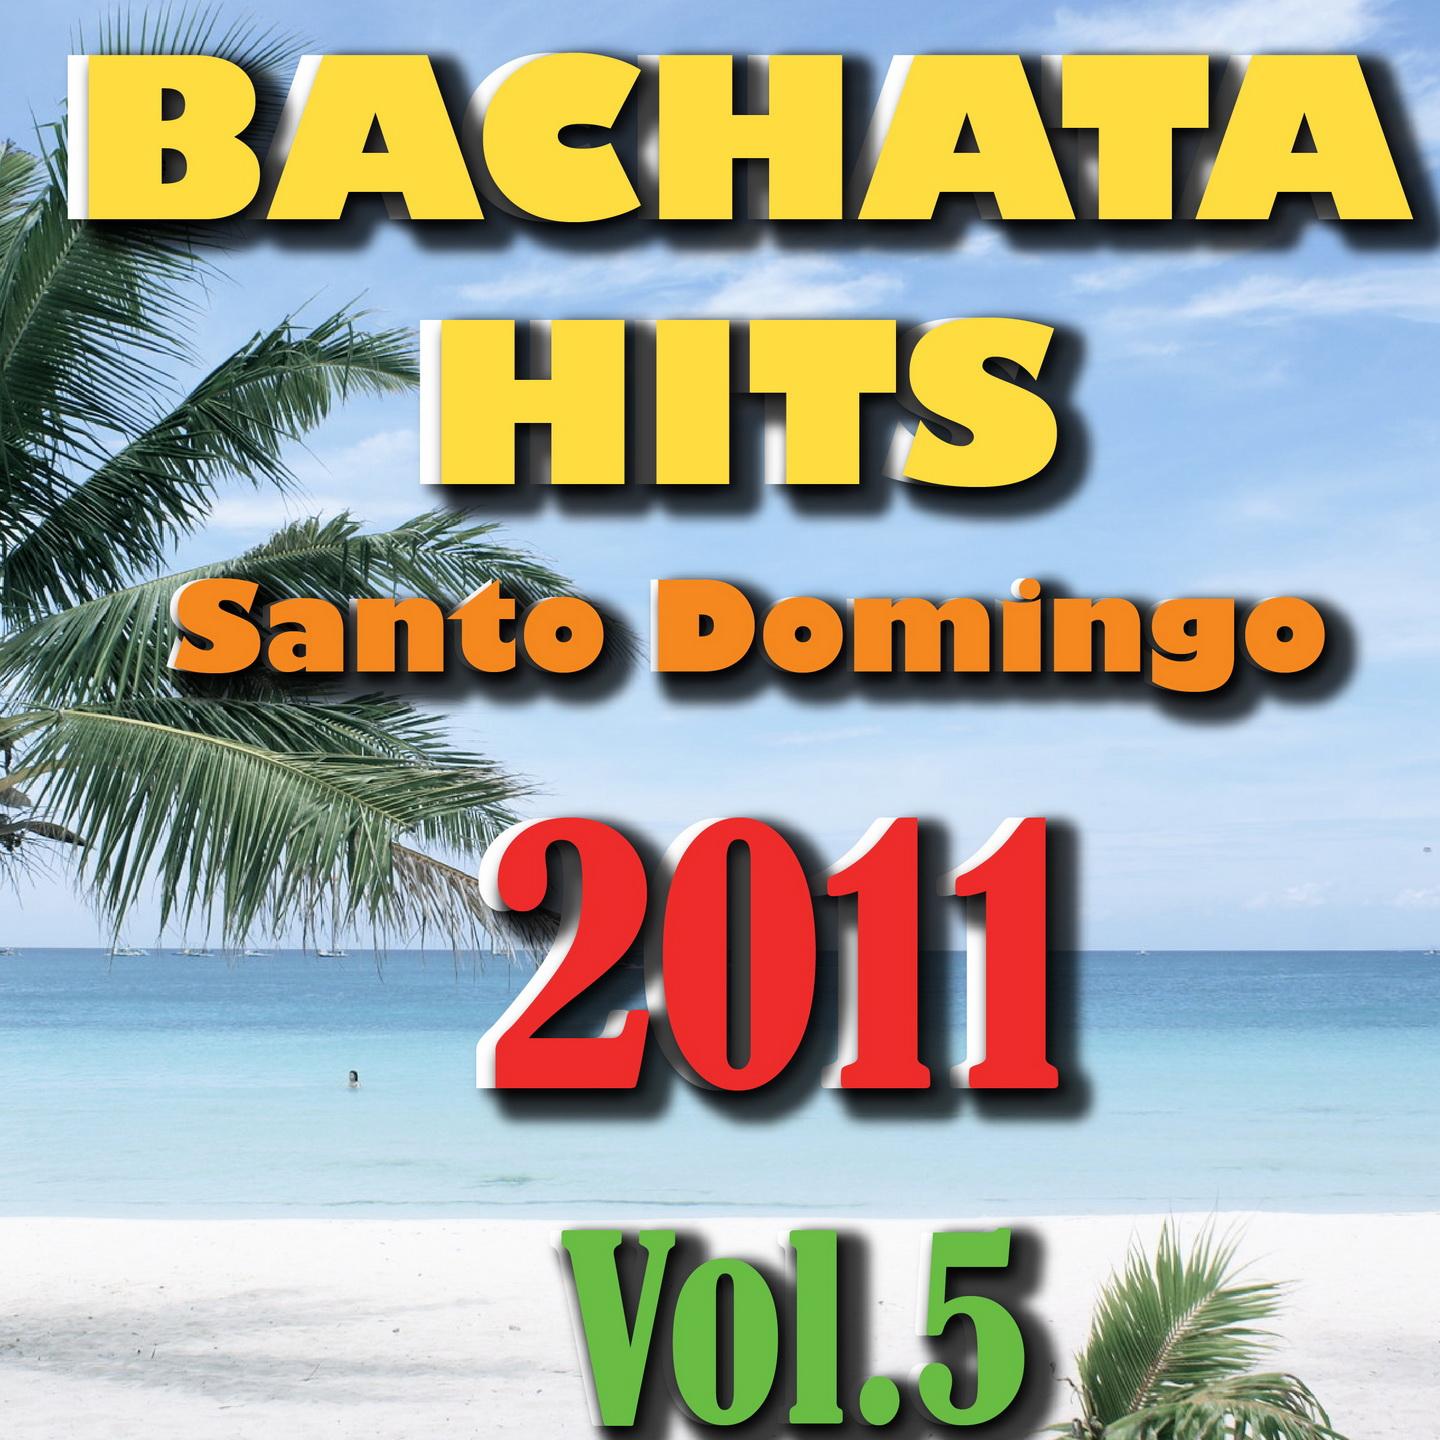 Santo Domingo Bachata Hits Compilation, Vol.5